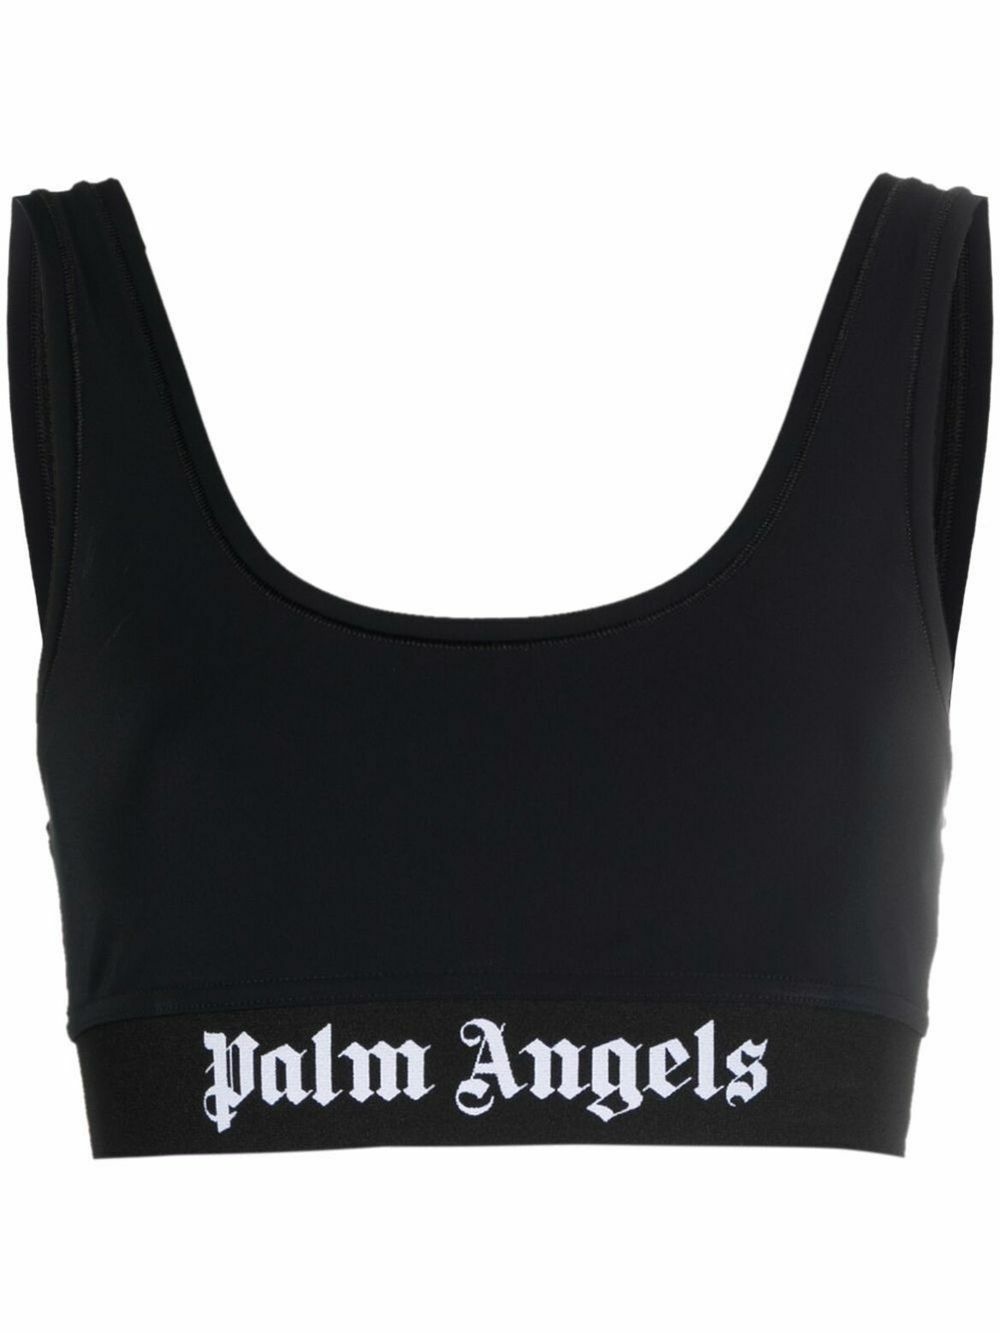 PALM ANGELS - Classic Logo Sport Bra Palm Angels